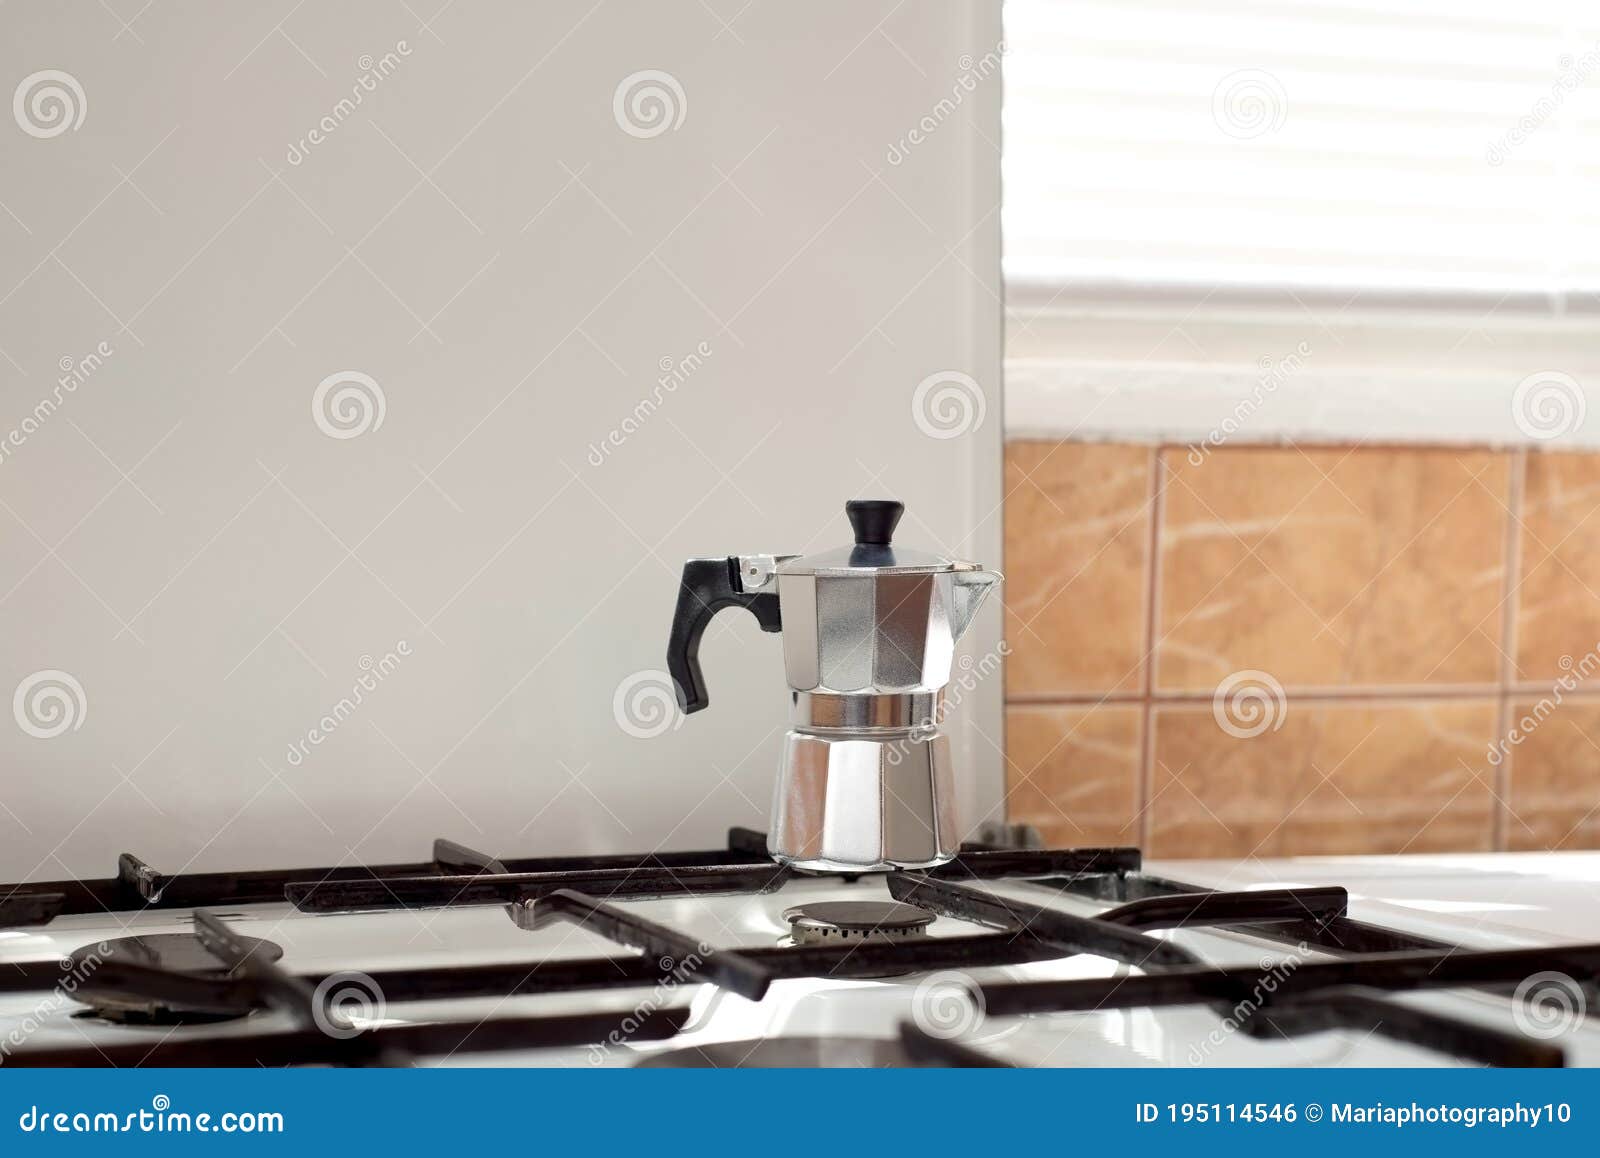 moka coffee pot on a gas stove